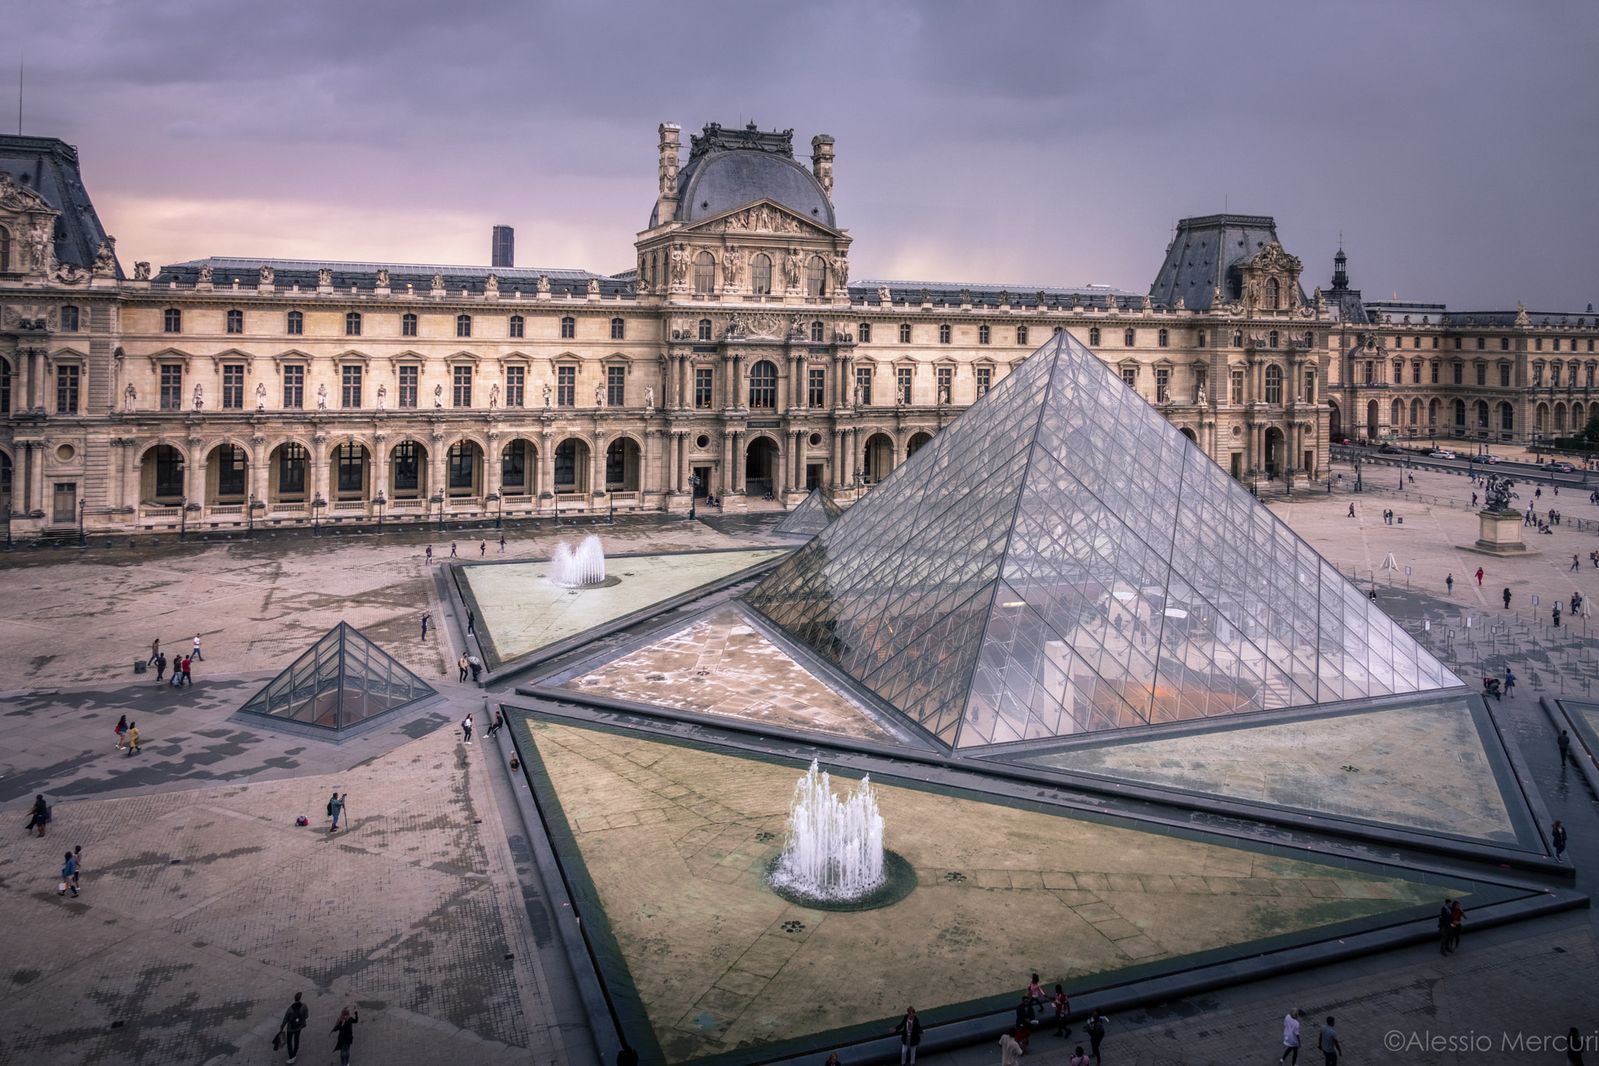 Louvre Museum Official Website